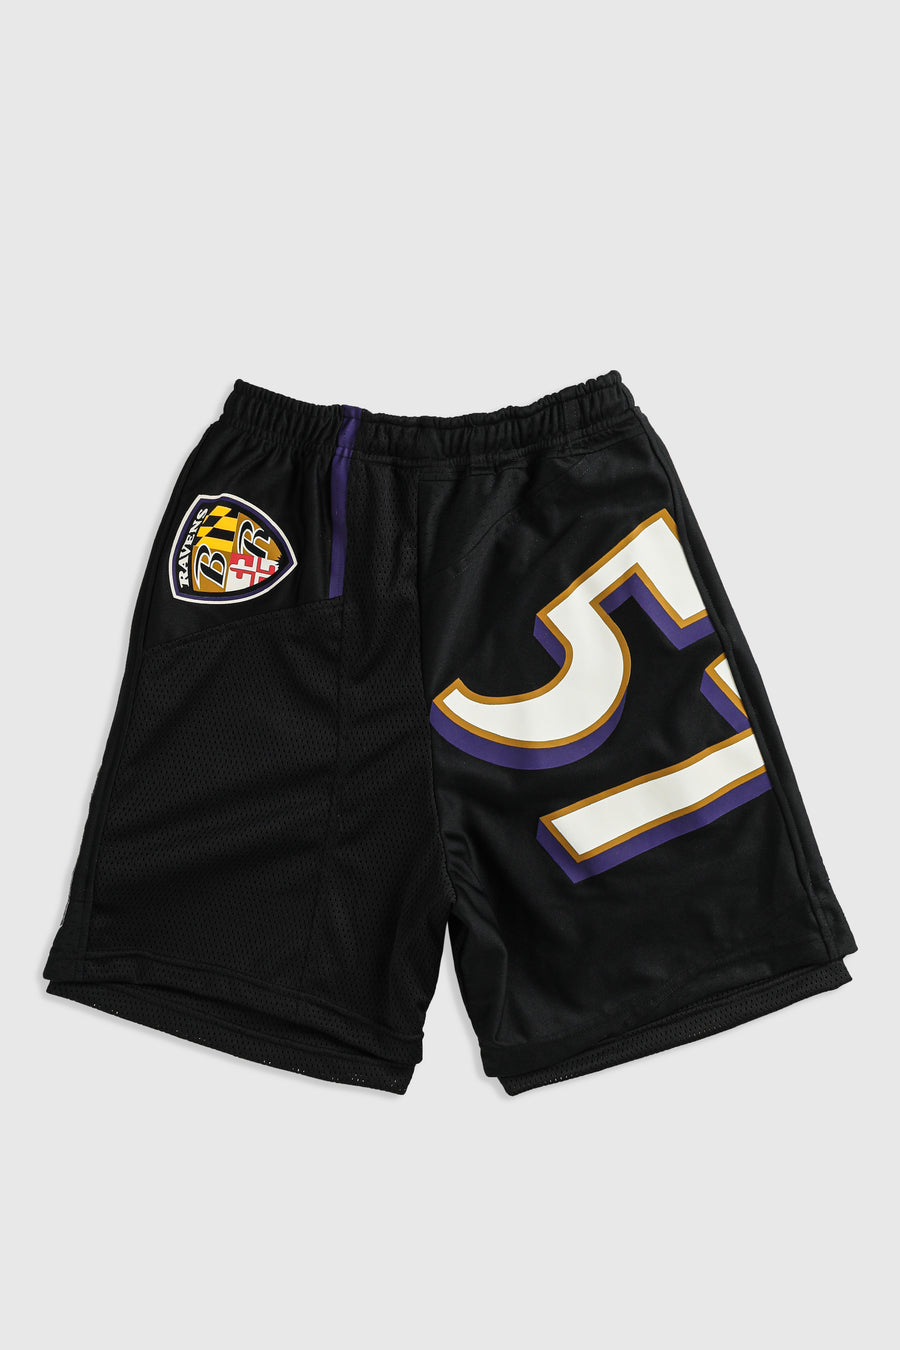 Unisex Rework Ravens NFL Jersey Shorts - XS